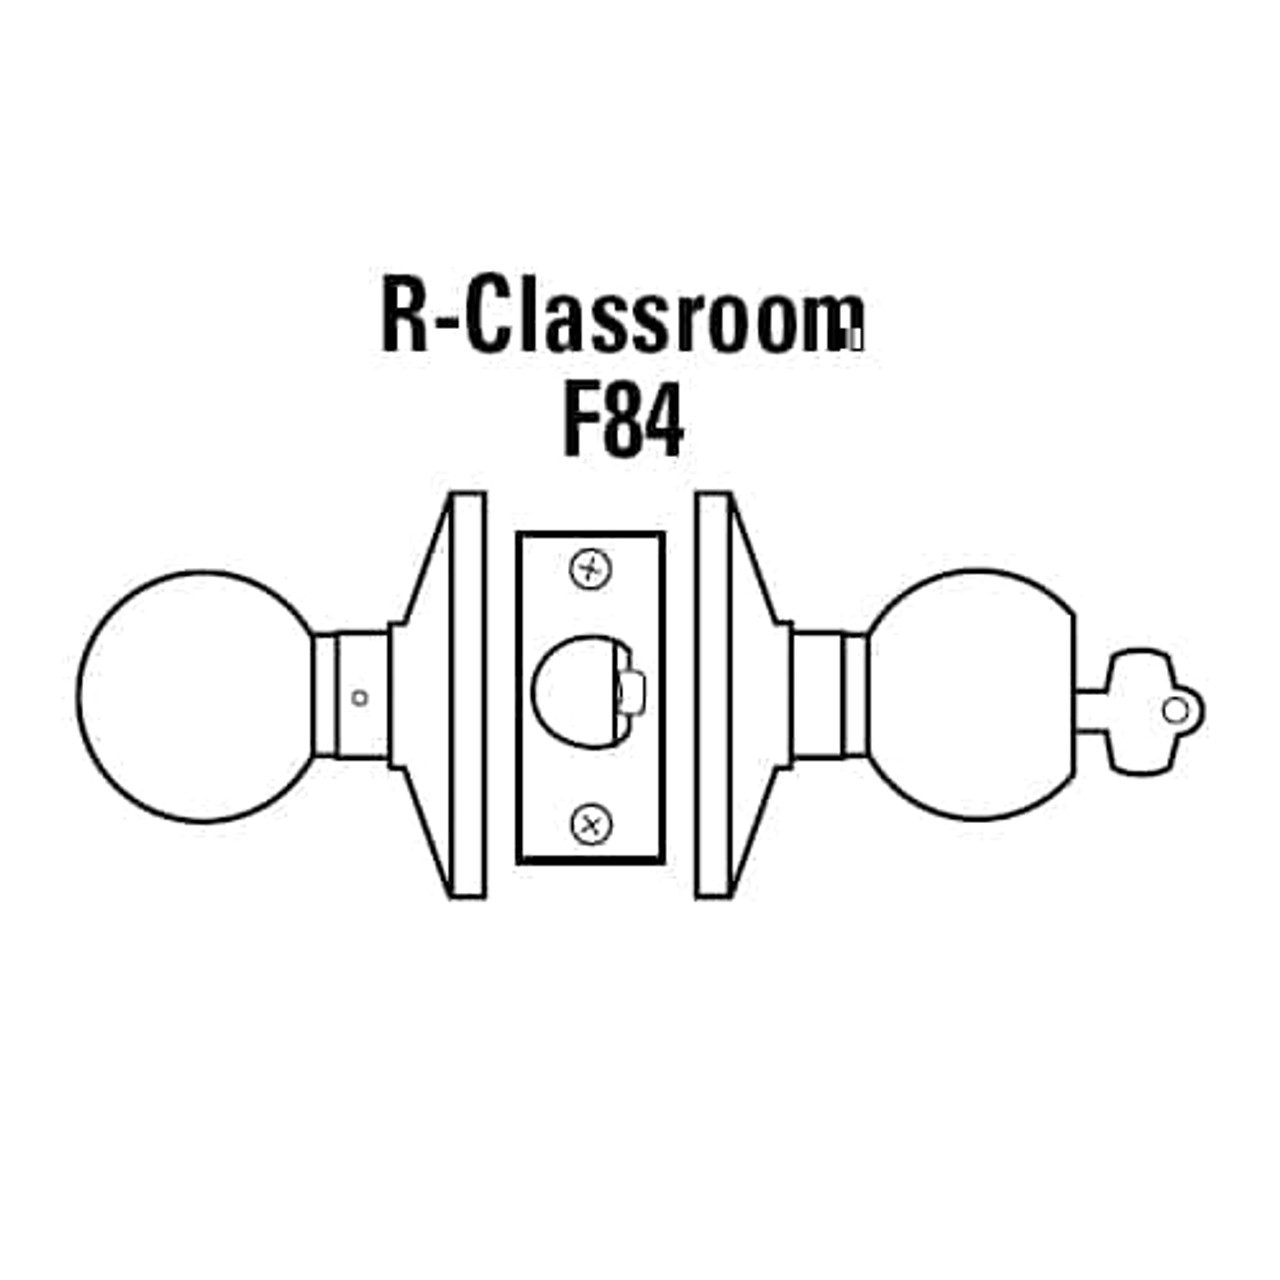 6K37R4CS3612 Best 6K Series Medium Duty Classroom Cylindrical Knob Locks with Round Style in Satin Bronze